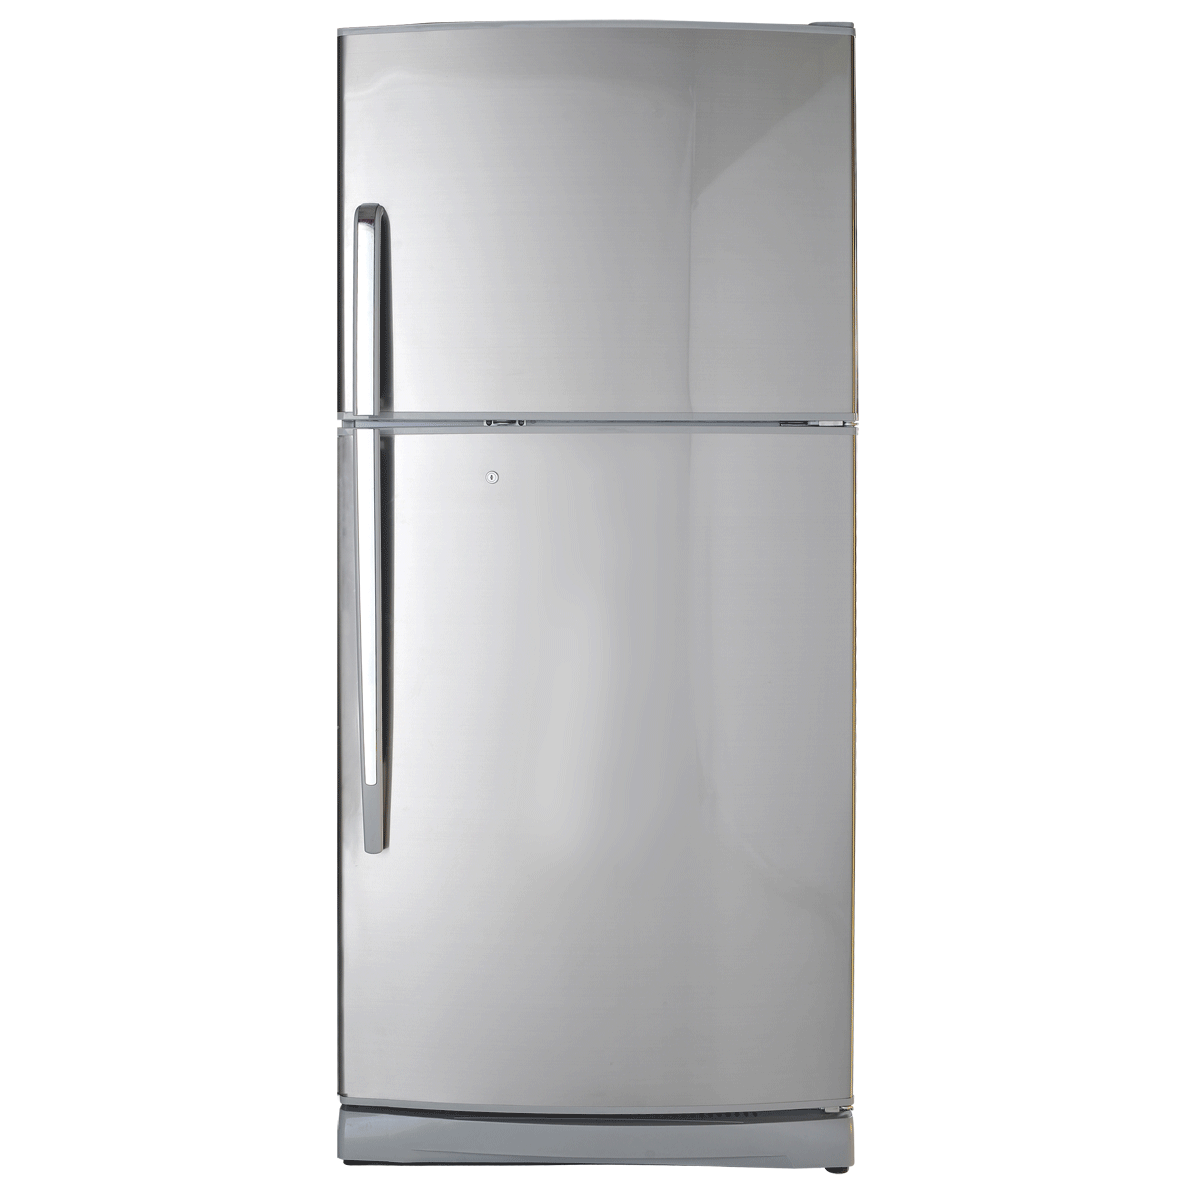 Refrigerator PNG image transparent image download, size: 1200x1200px